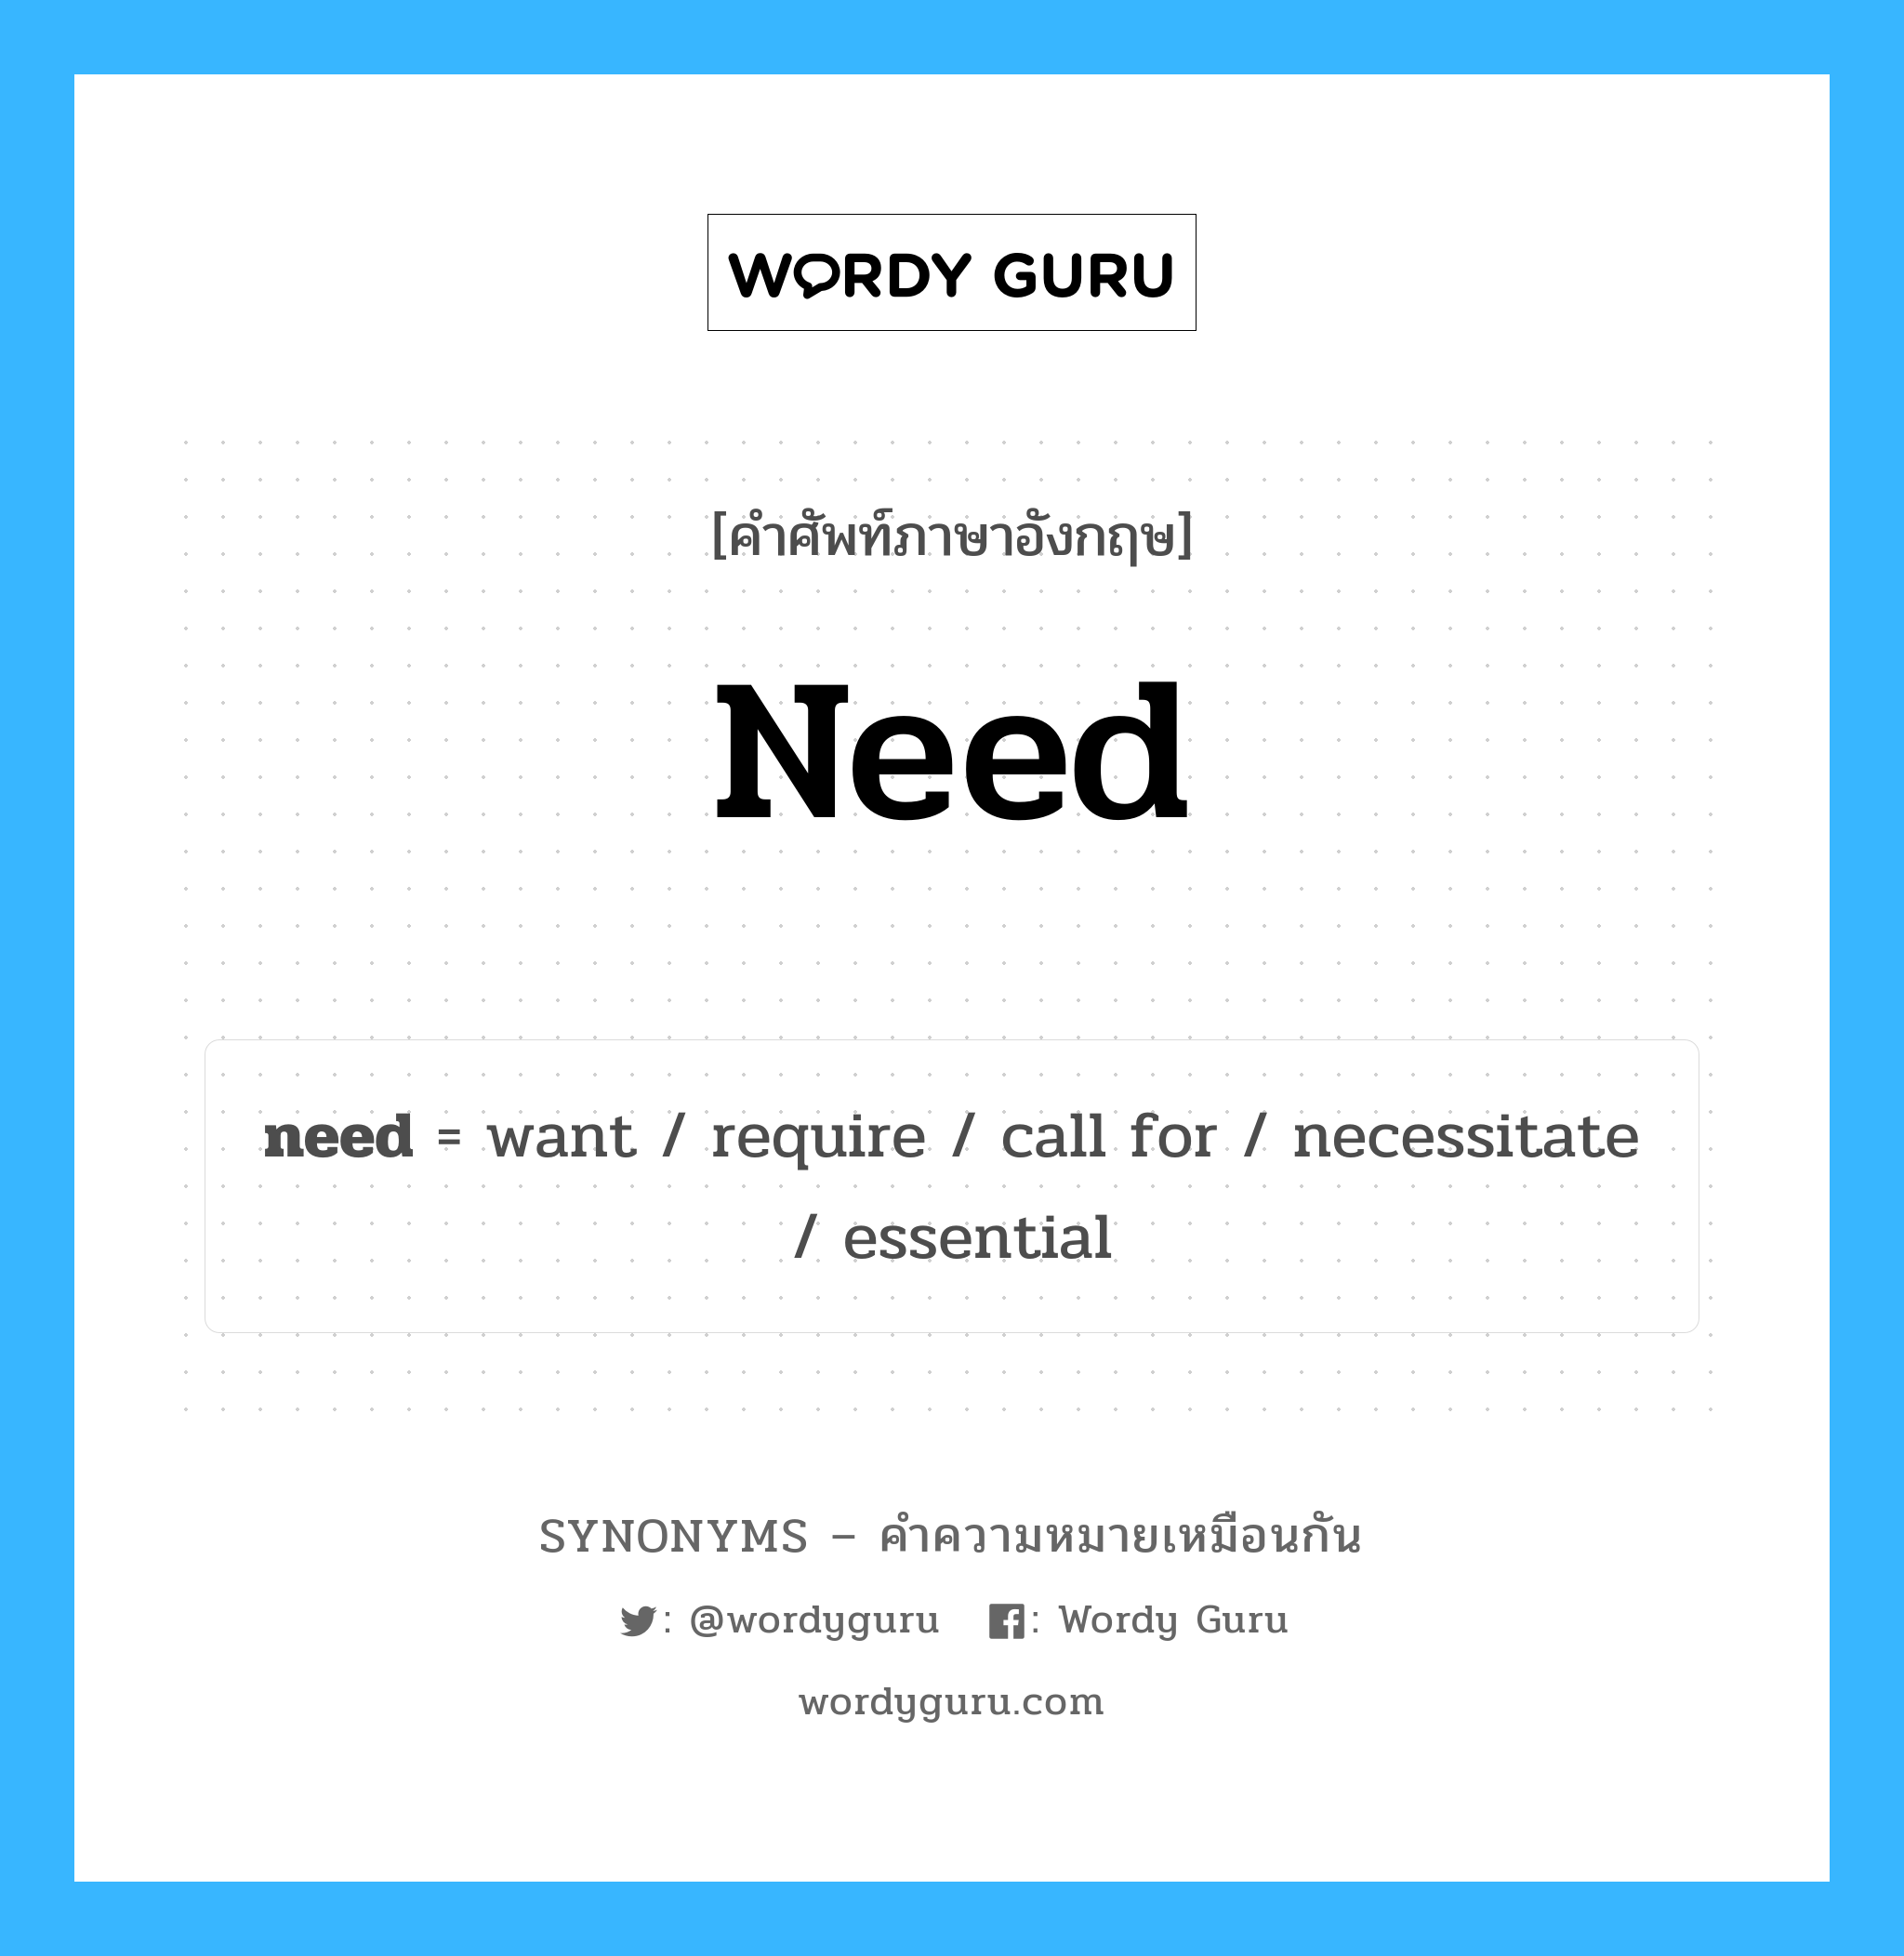 require เป็นหนึ่งใน need และมีคำอื่น ๆ อีกดังนี้, คำศัพท์ภาษาอังกฤษ require ความหมายคล้ายกันกับ need แปลว่า จำเป็นต้อง หมวด need